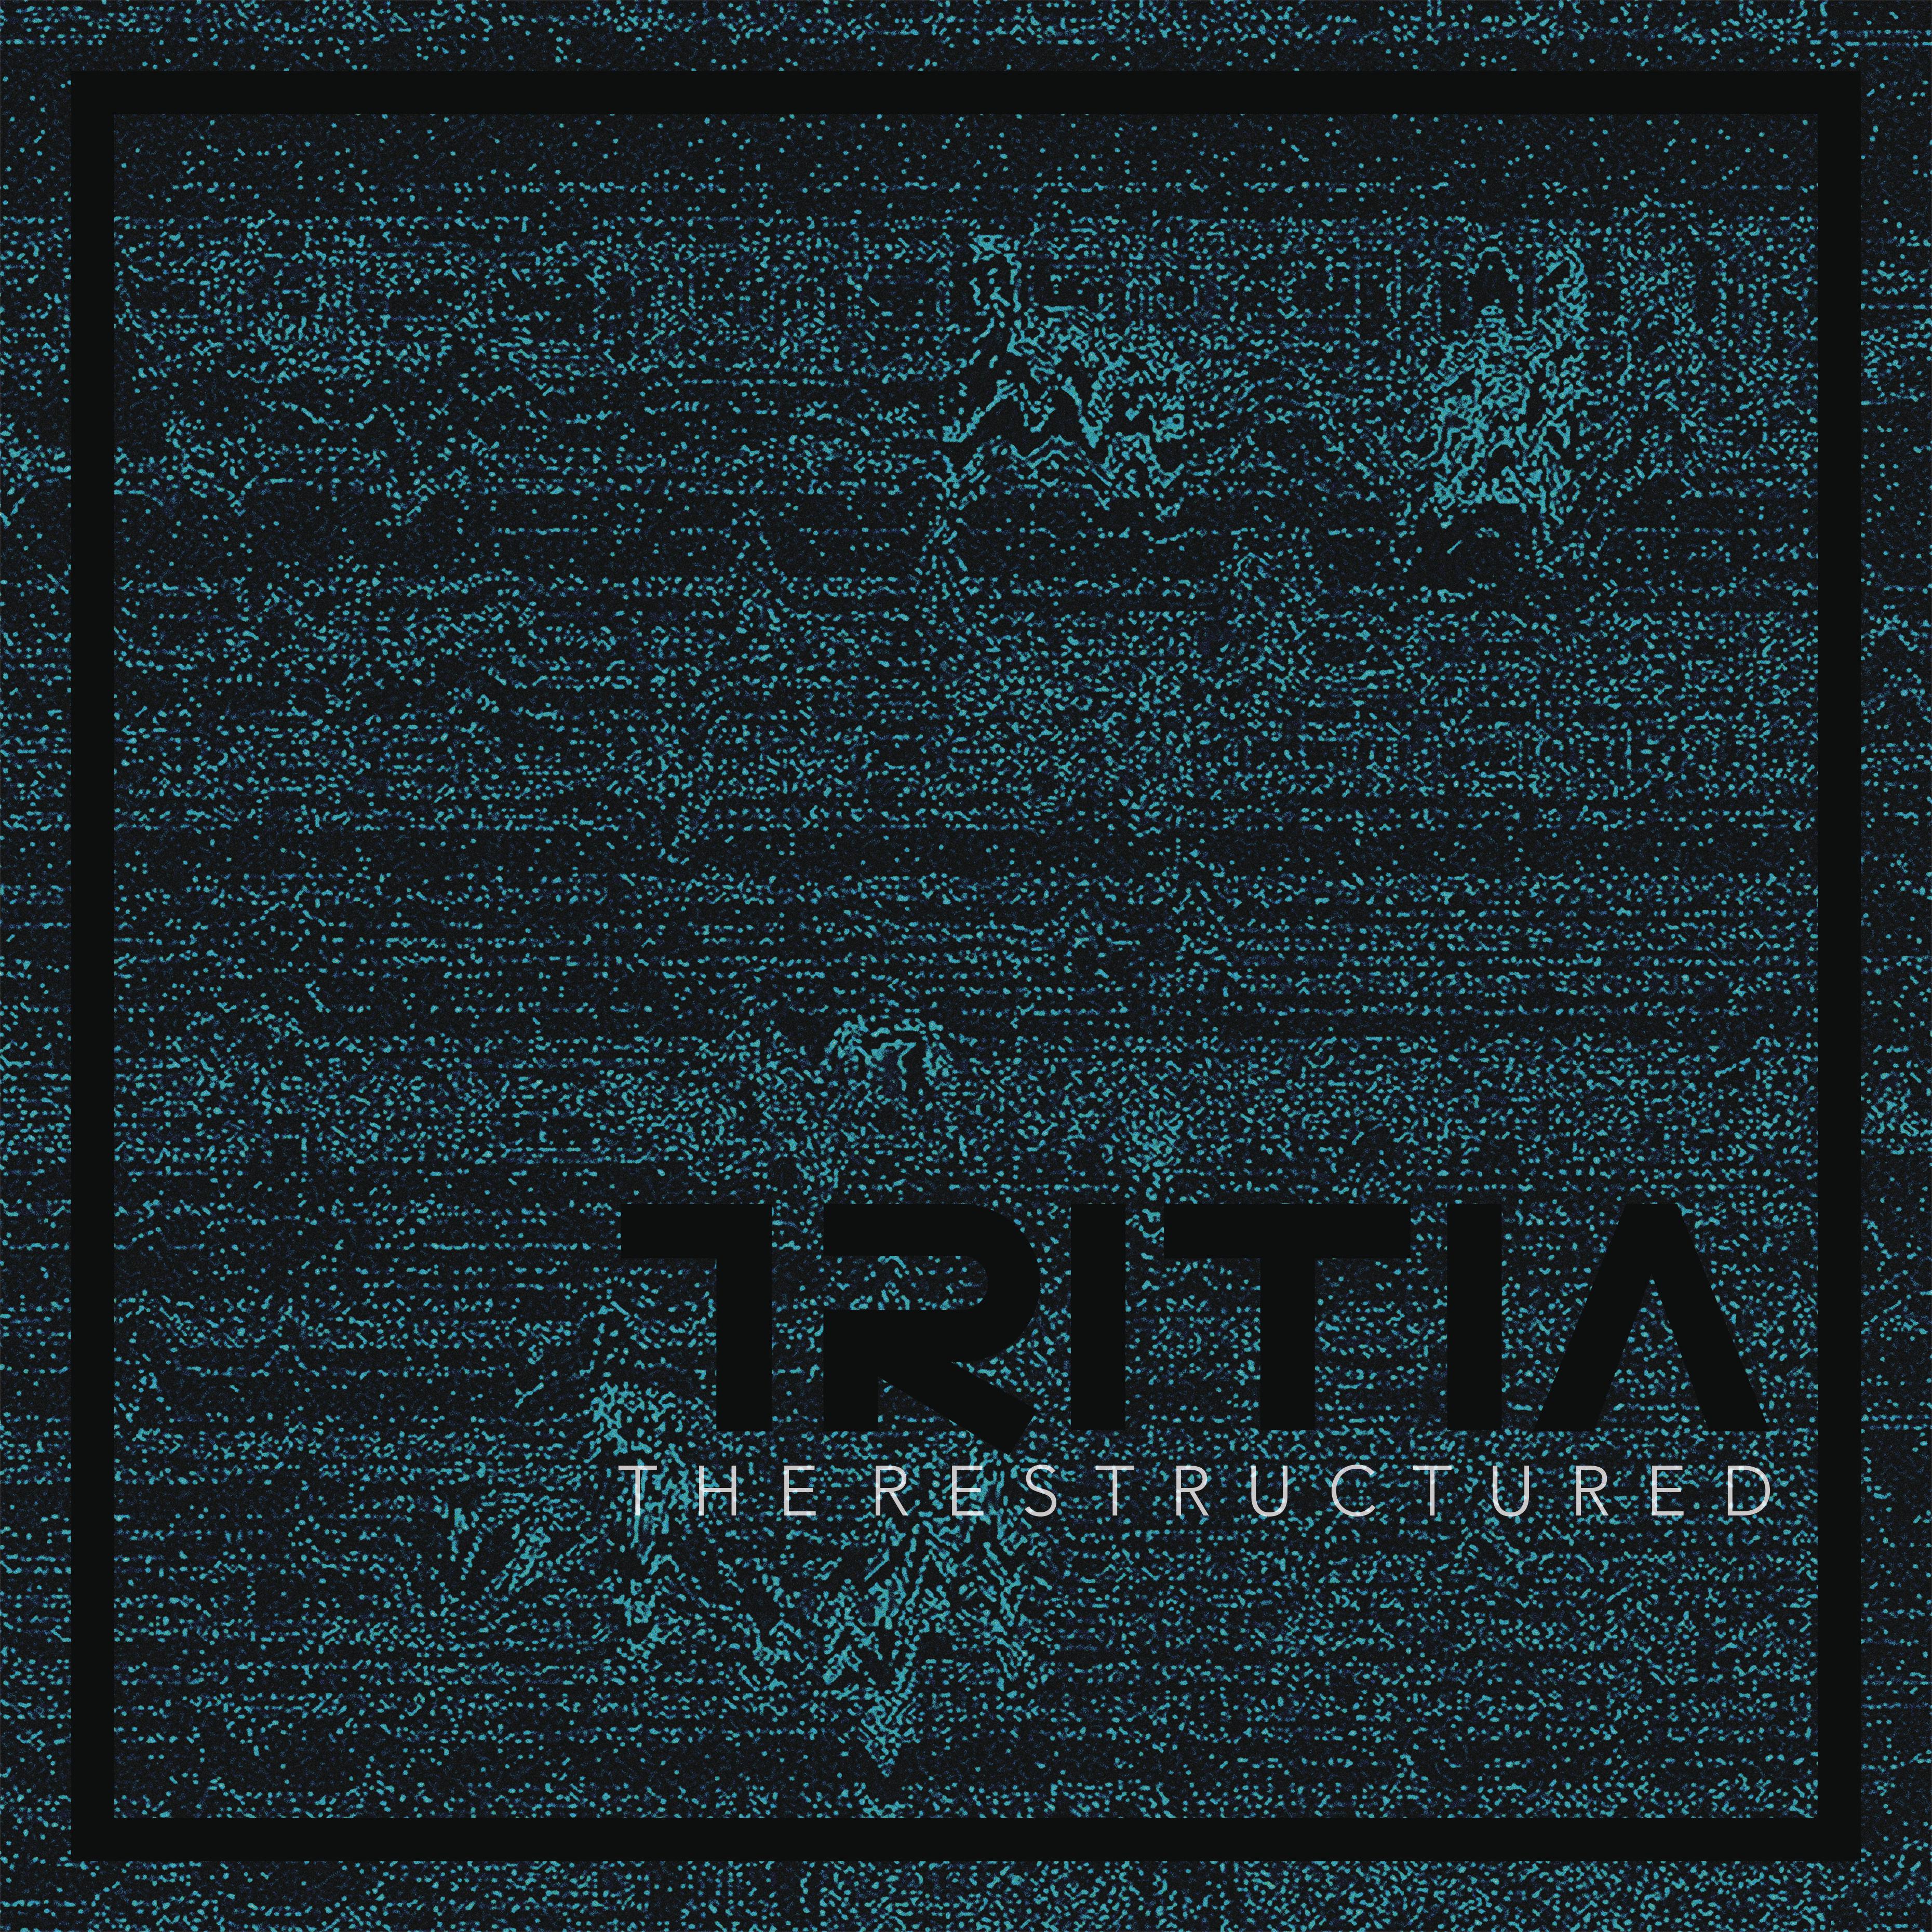 Tritia - Wake